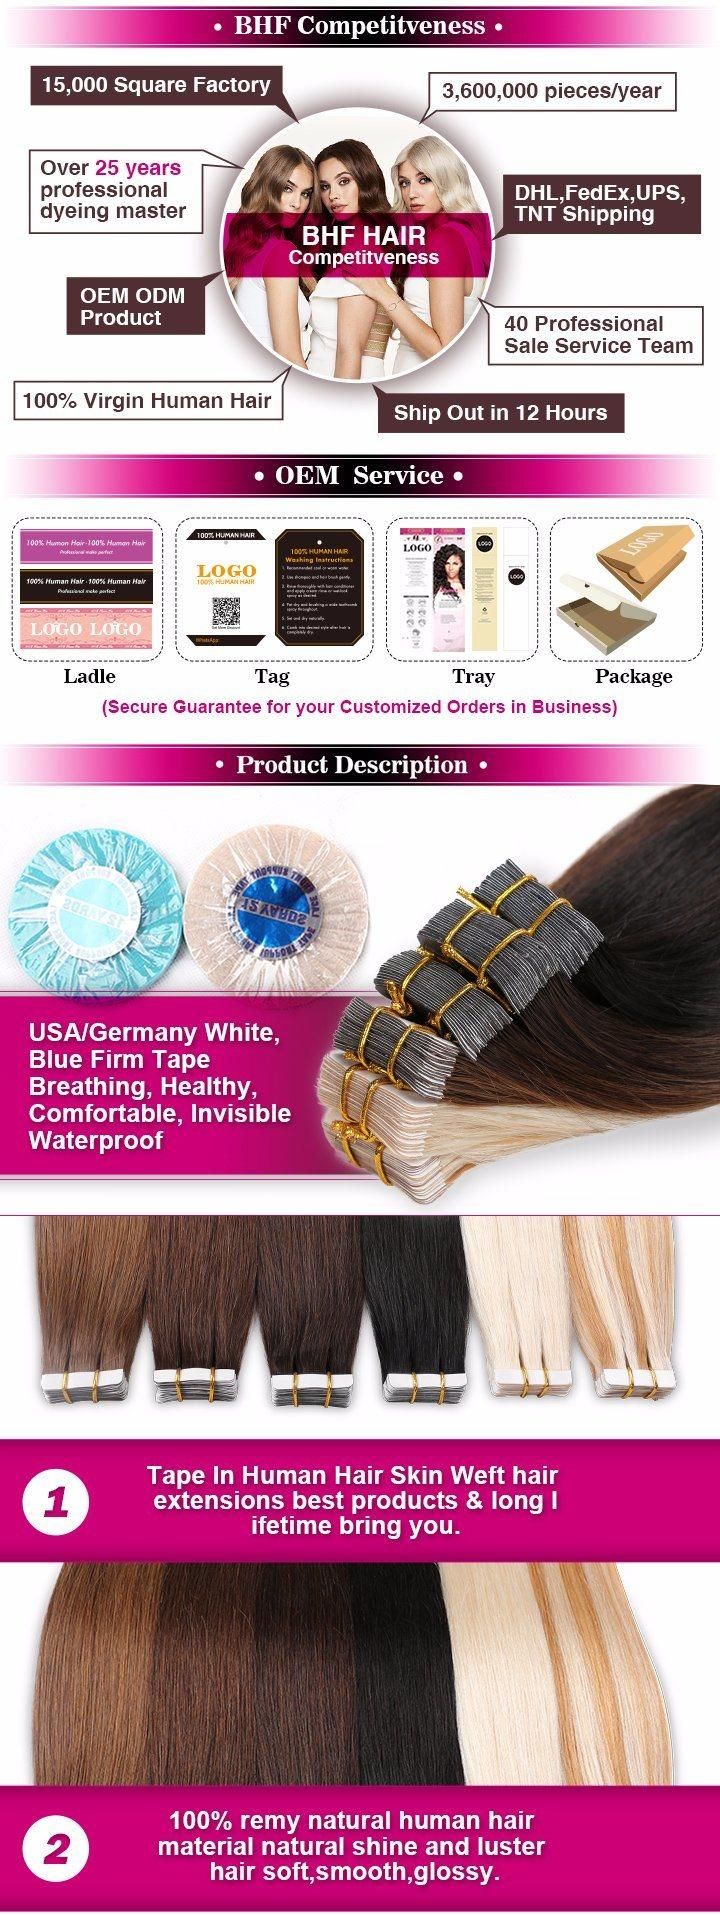 Brazilian Virgin Hair Straight Clip in Human Hair Extensions 100g/Set 10PCS 14-24" Natural Black Human Hair Clip Ins Extensions